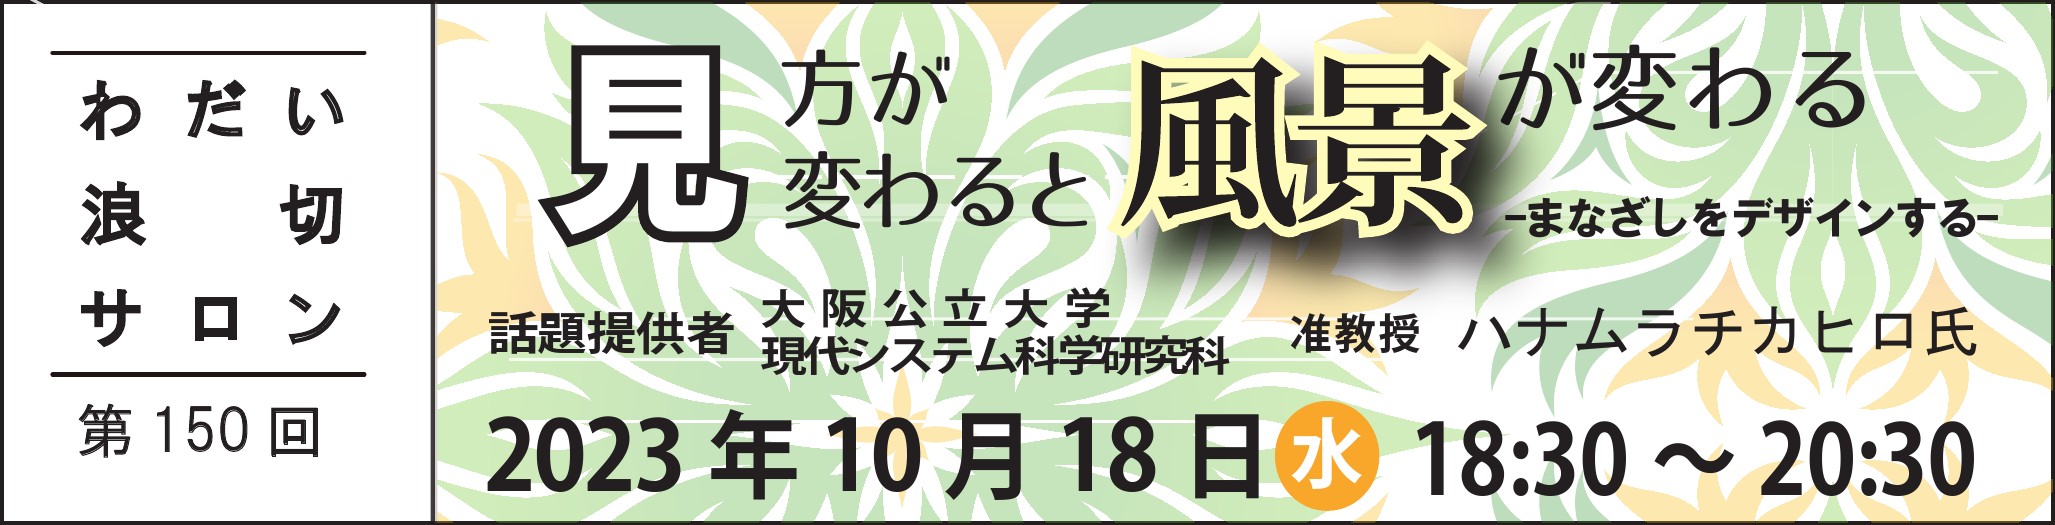 No150-3_wadai_namikiri_salon_banner.jpg